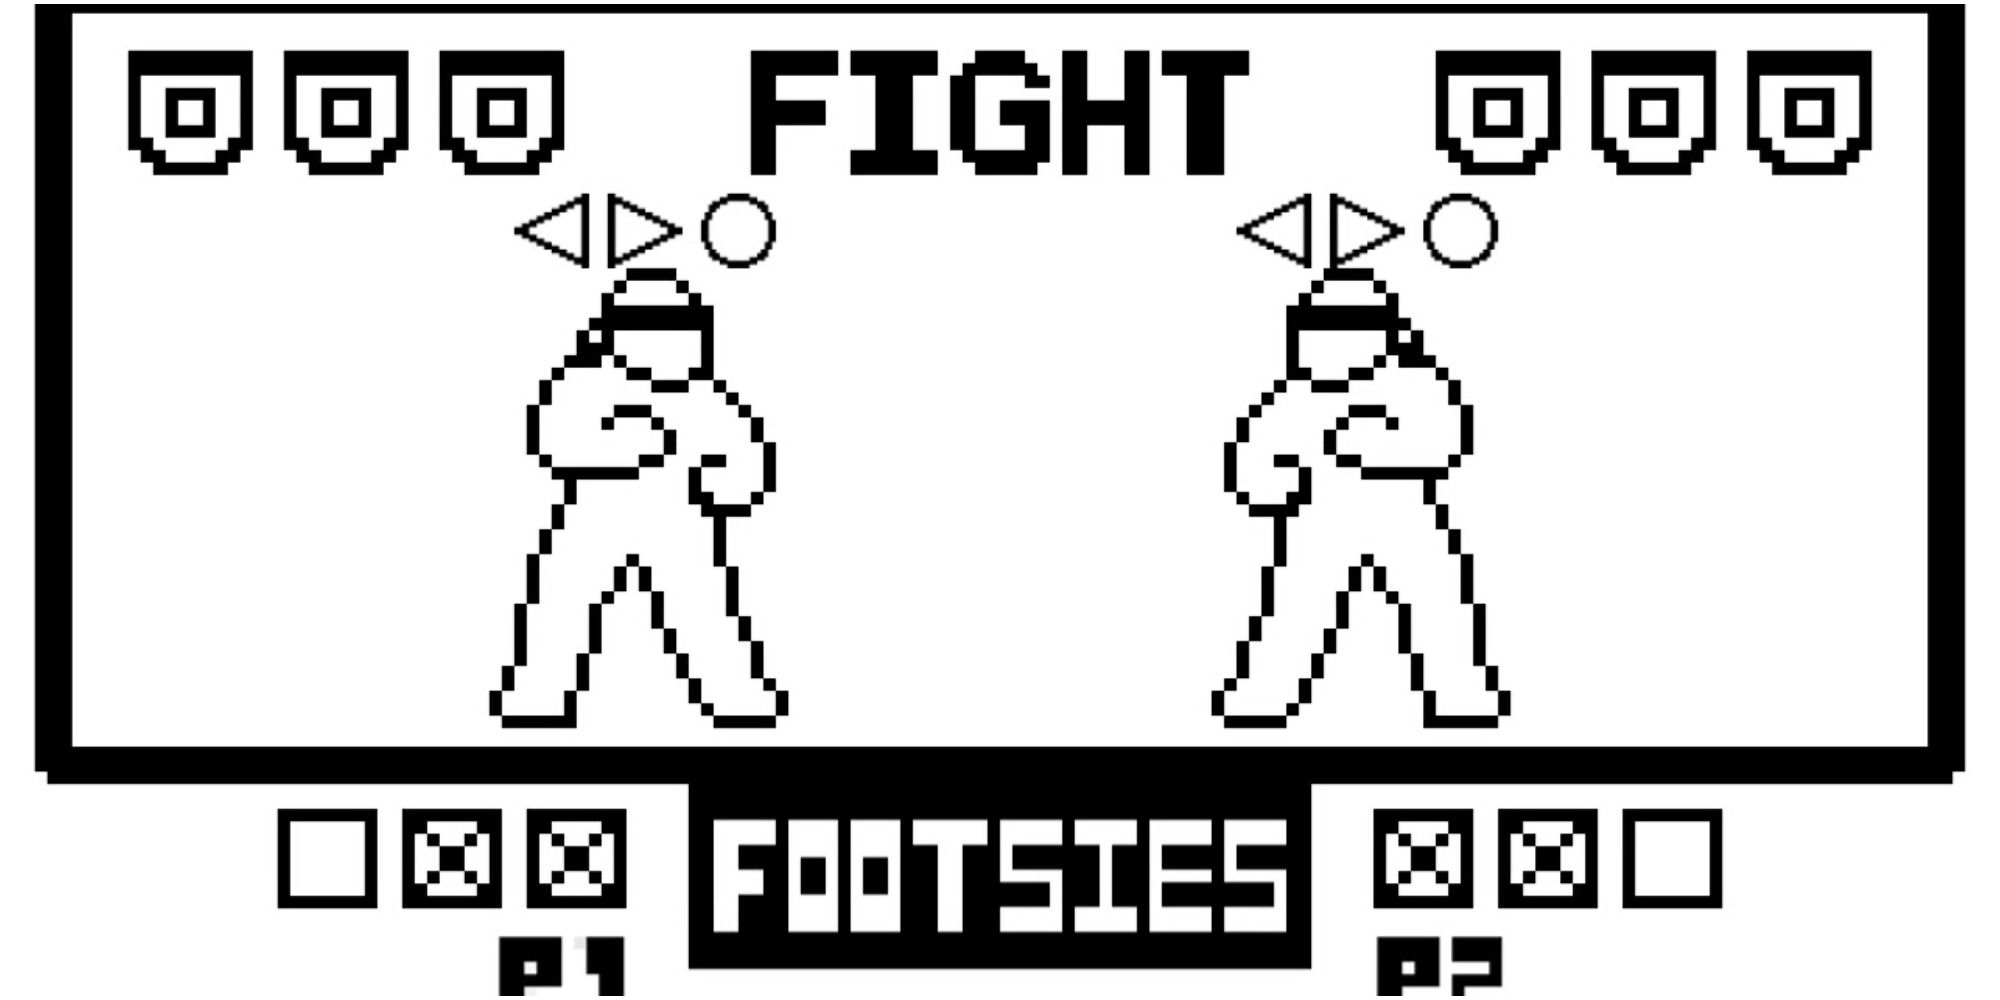 footsies fighting game